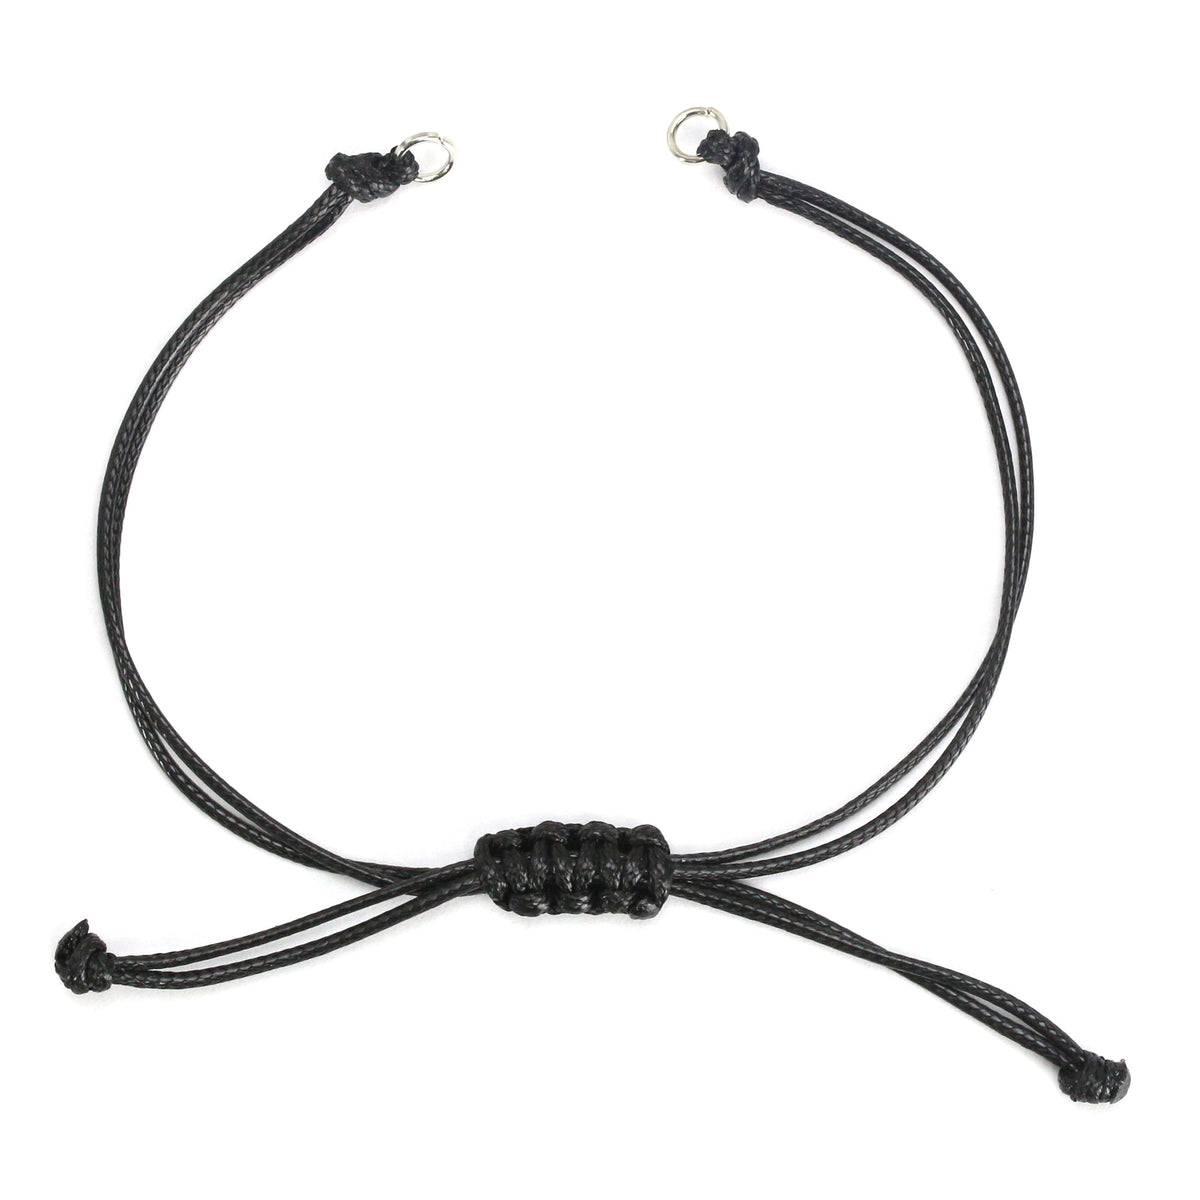 Black Nylon Adjustable String Bracelet with Decorative Slide Knot, Pac ...